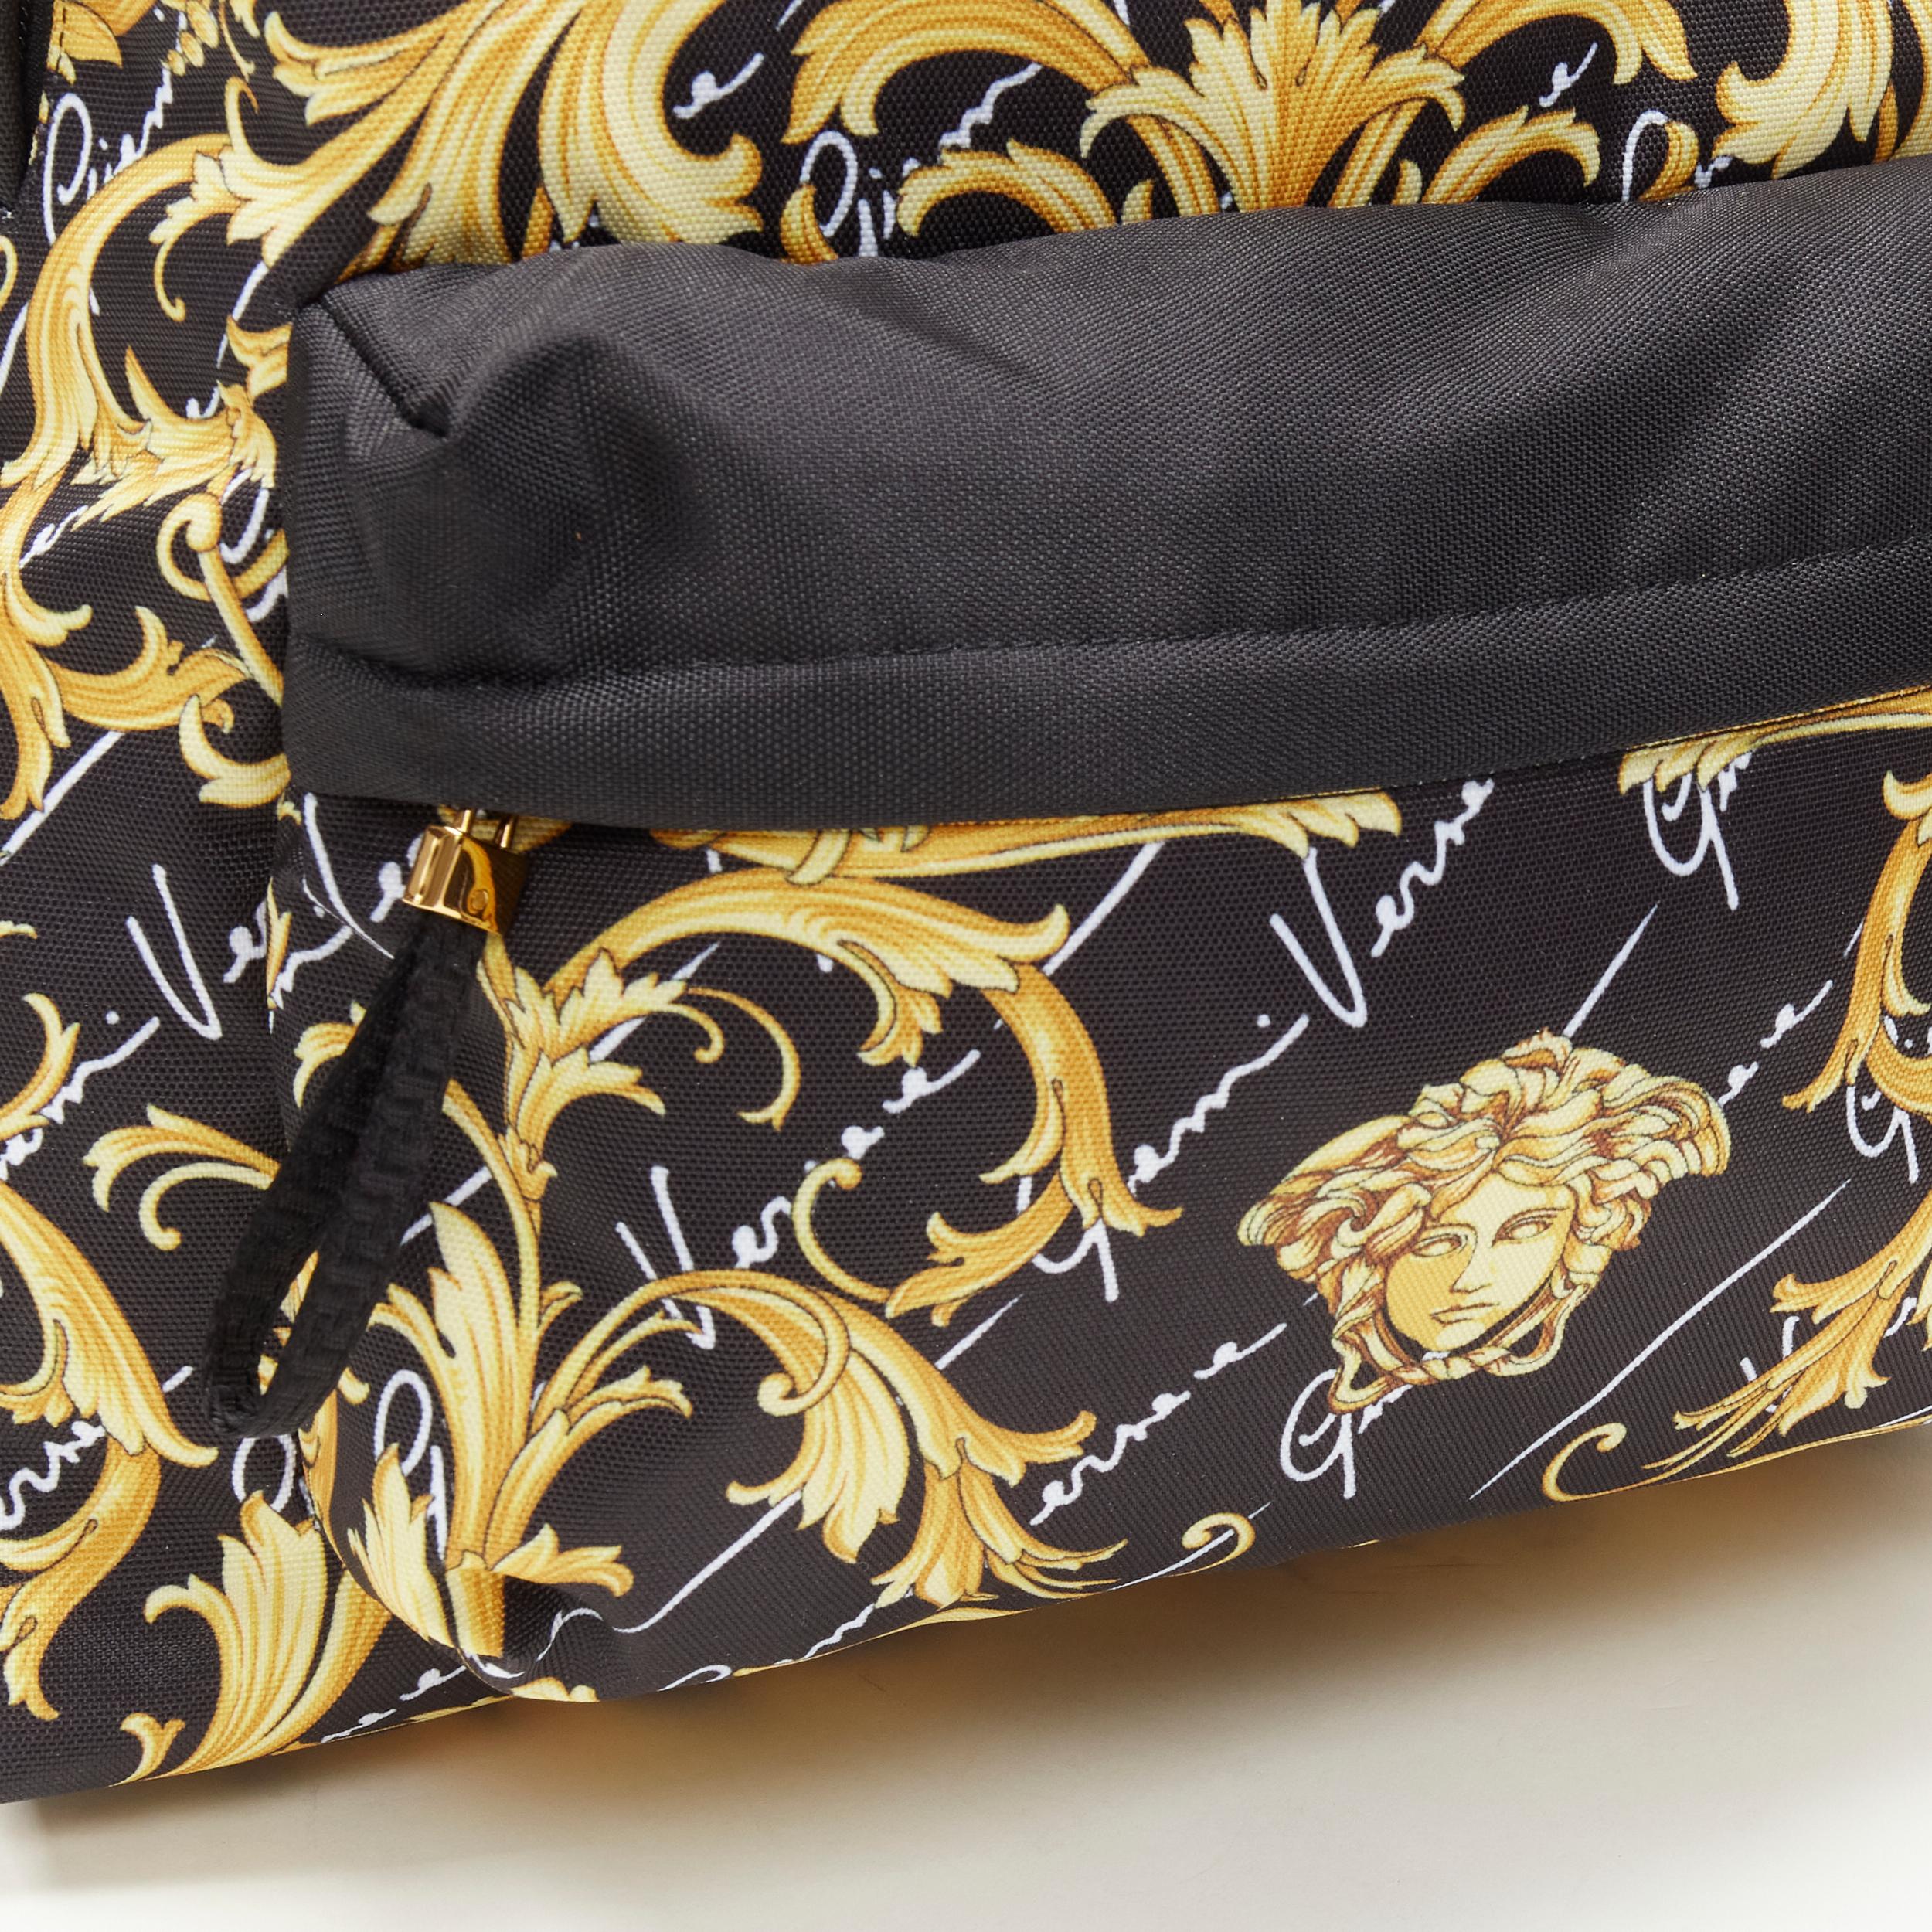 Men's new VERSACE Gianni Signature gold Barocco Virtus Medusa print backpack bag